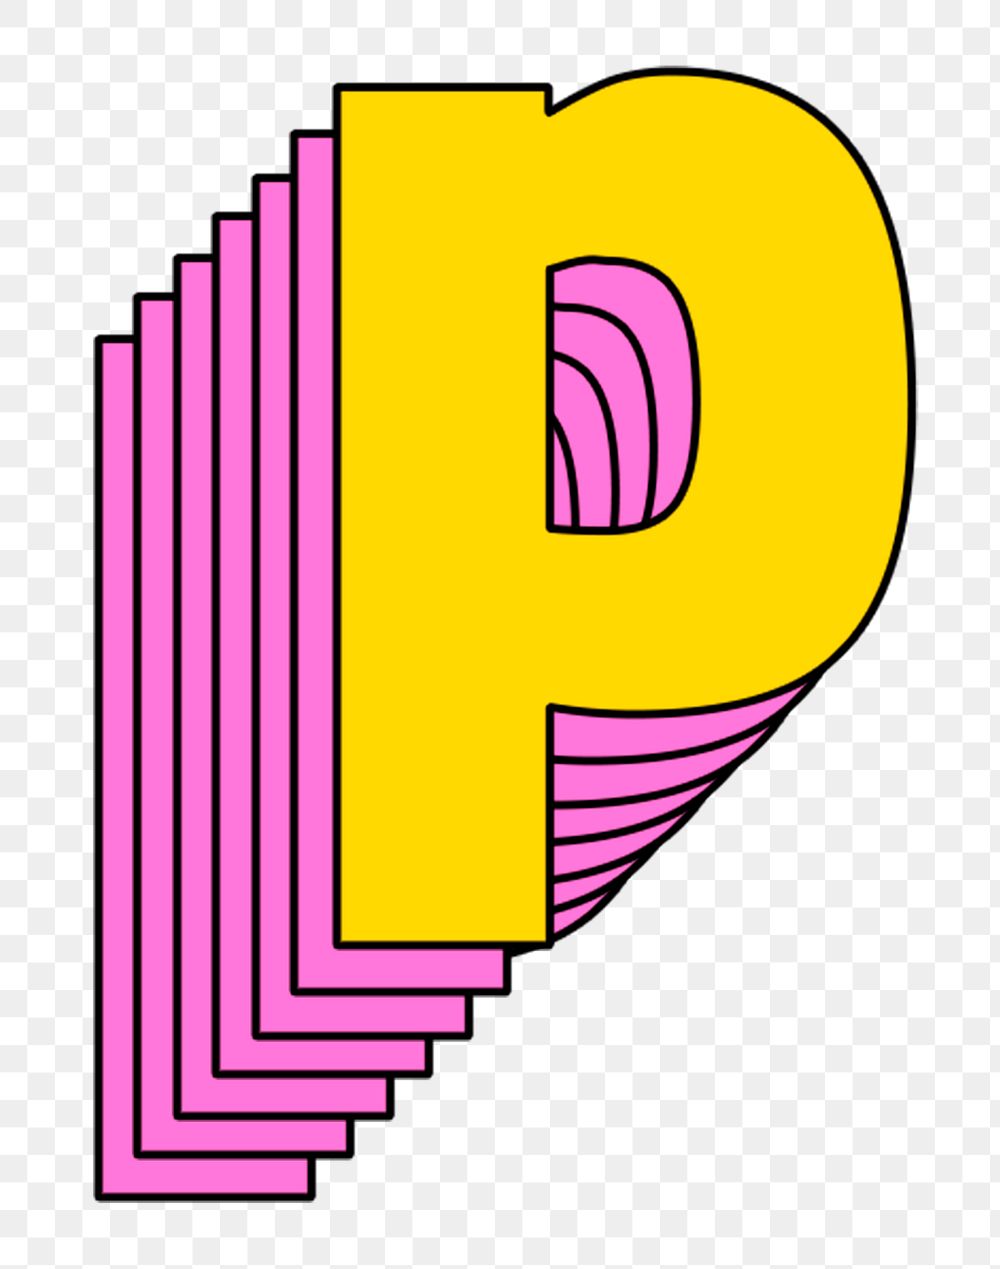 Transparent character p 3d stylized typeface